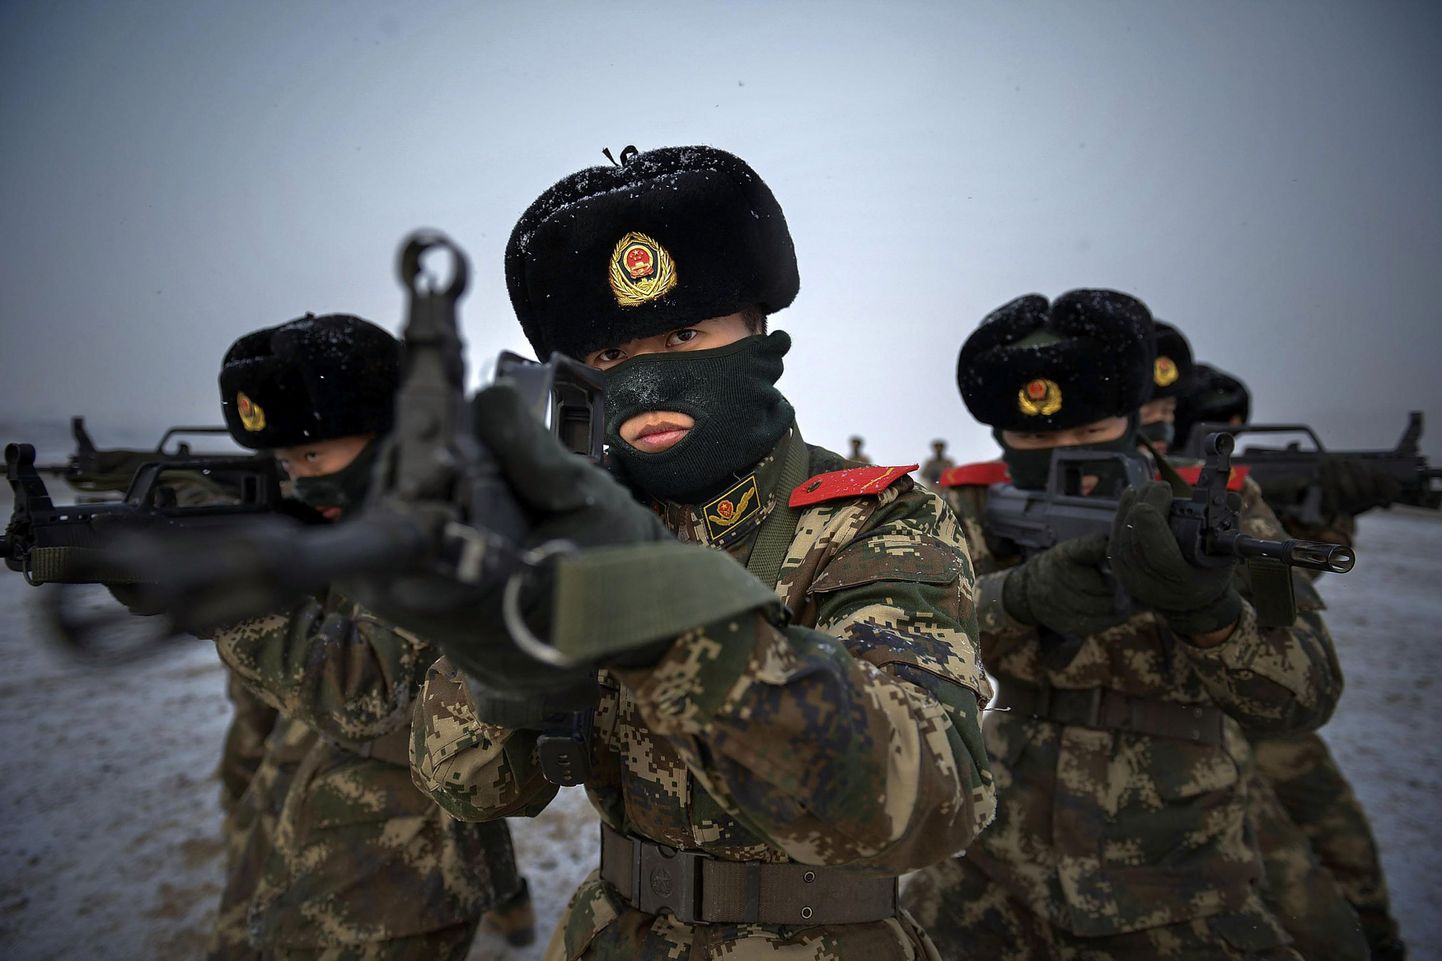 Hiina julgekujõudude õppus Xinjiangi provintsis Kashgaris.